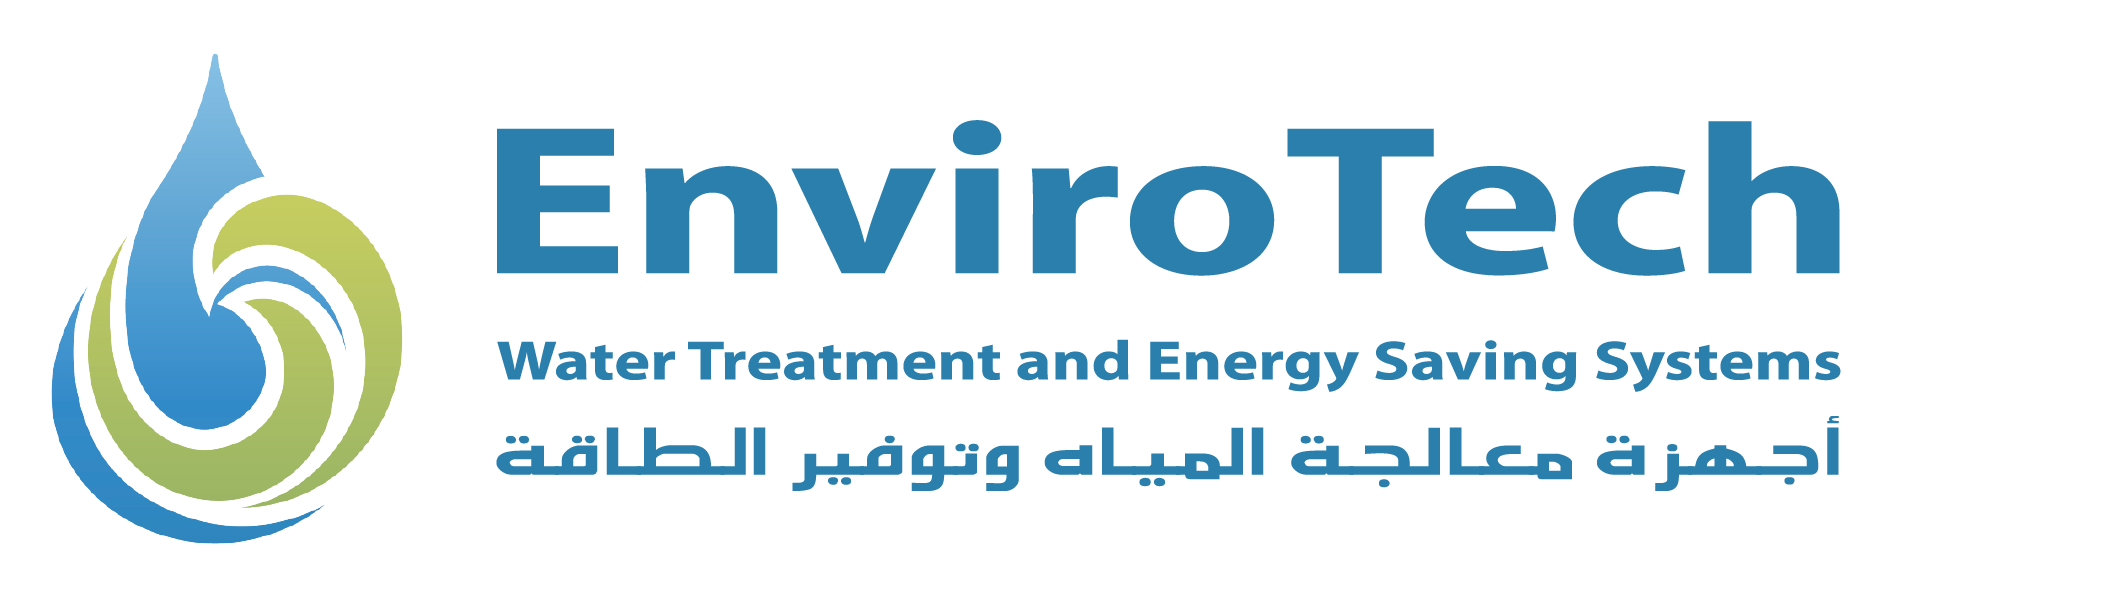 EnviroTech Limited Logo